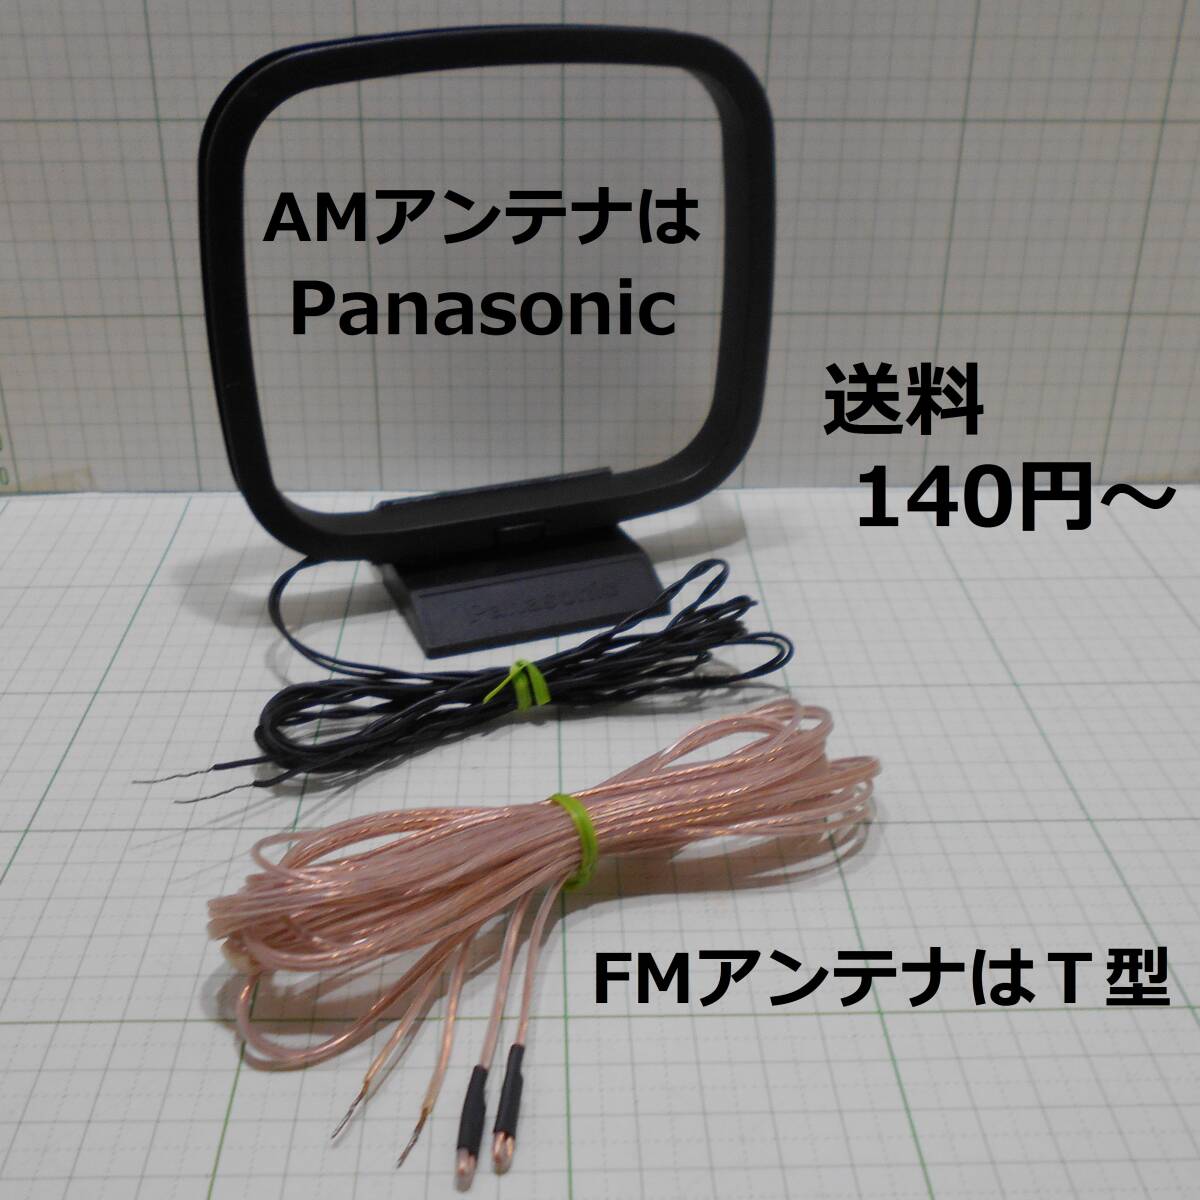  стоимость доставки 140 иен -* рабочий товар *AM петля антенна .FM антенна *AM. Panasonic длина шнура примерно 140cm*FM. длина шнура примерно 225cm